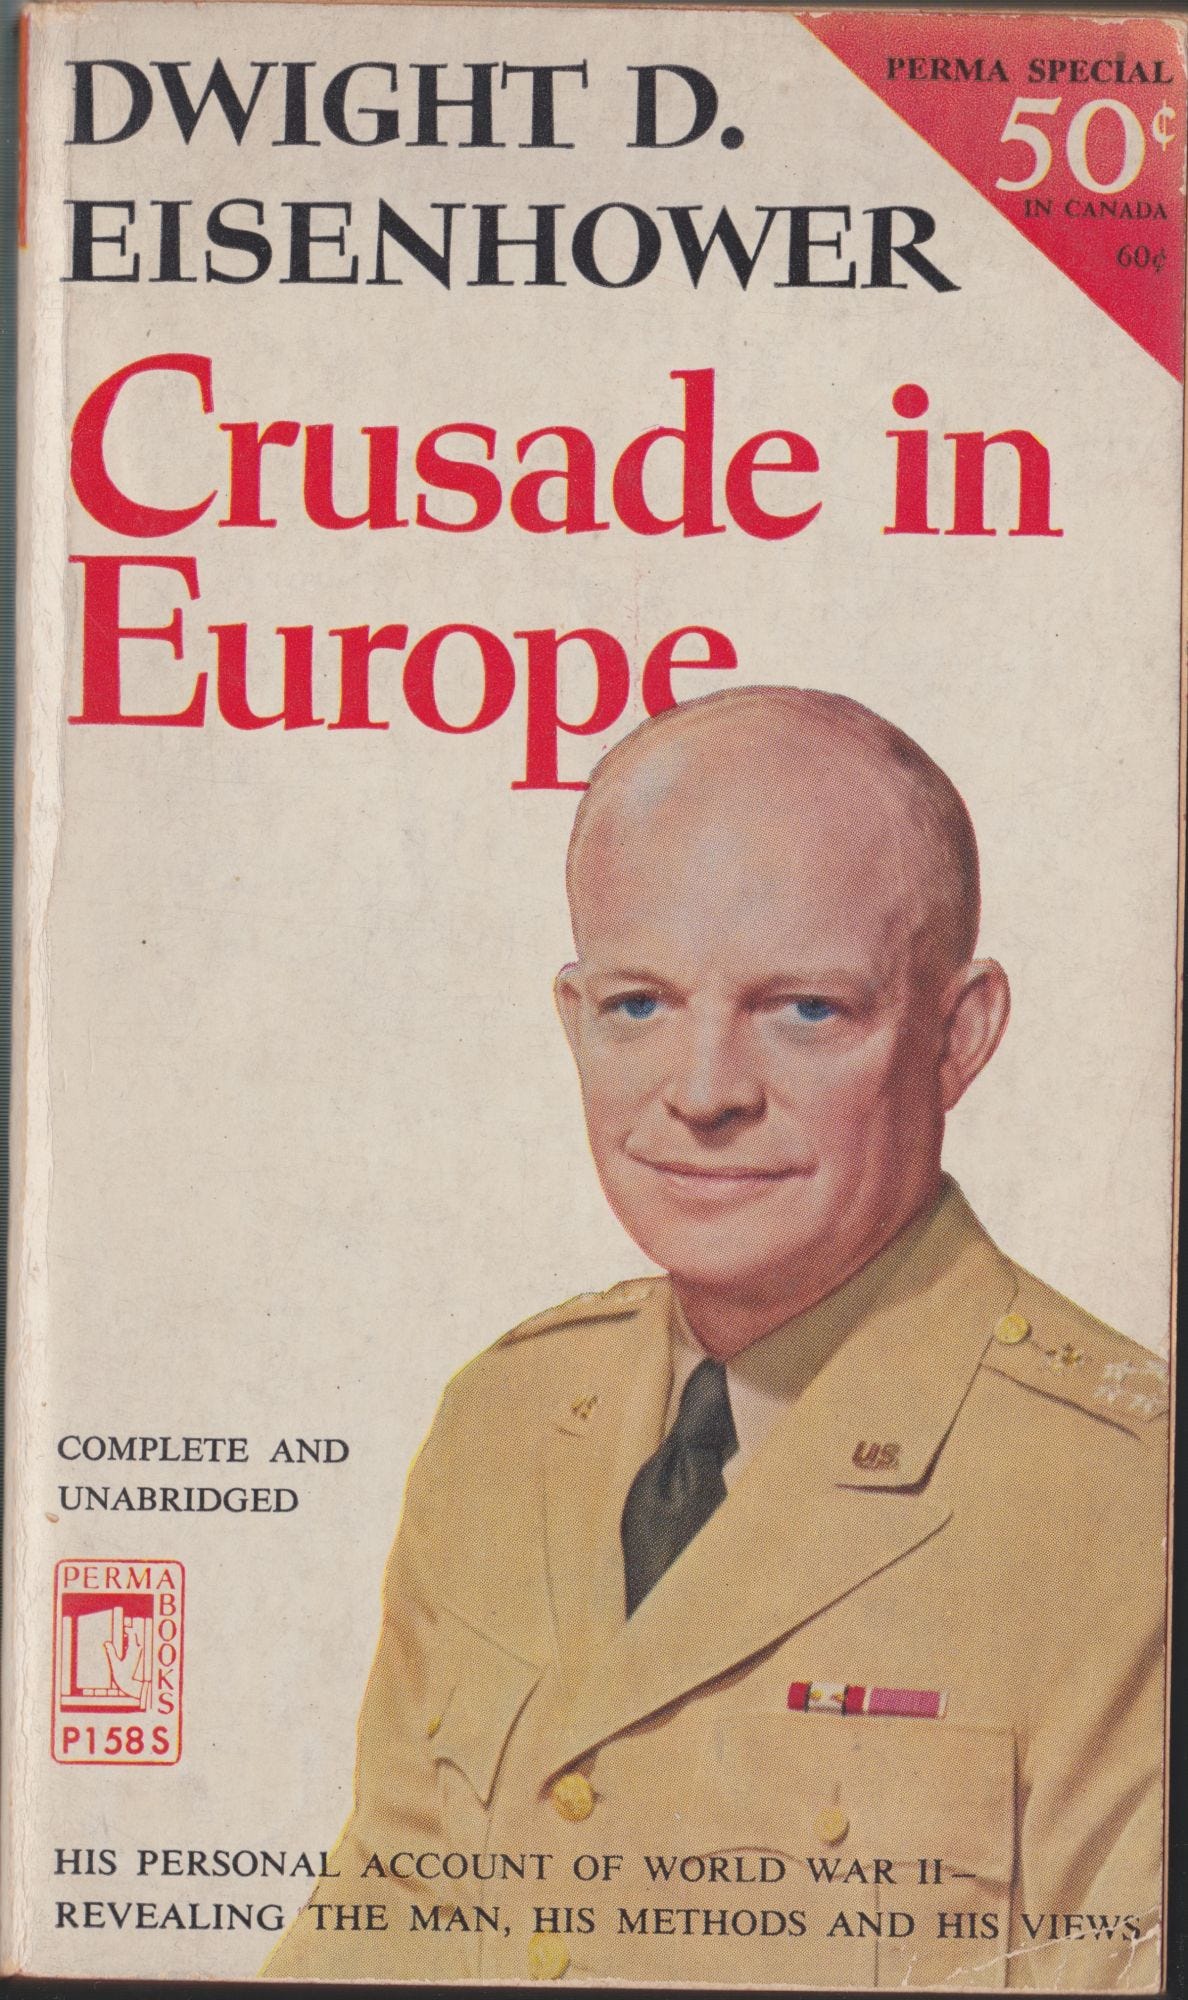 "Crusade in Europe" by Dwight Eisenhower